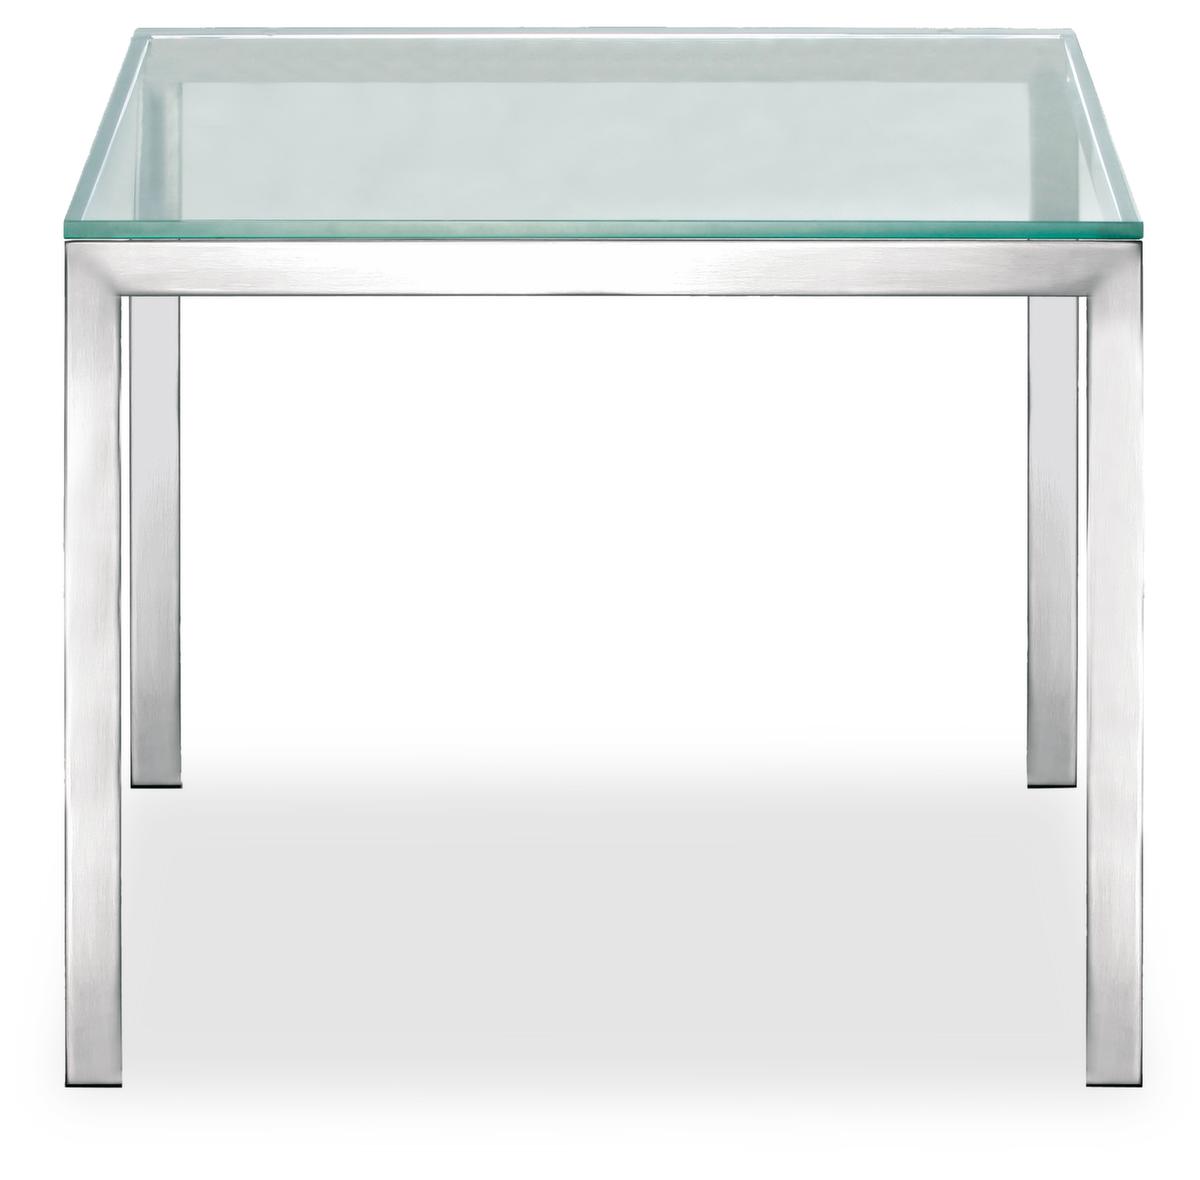 Nowy Styl Table avec plateau en verre, largeur x profondeur 550 x 550 mm  ZOOM